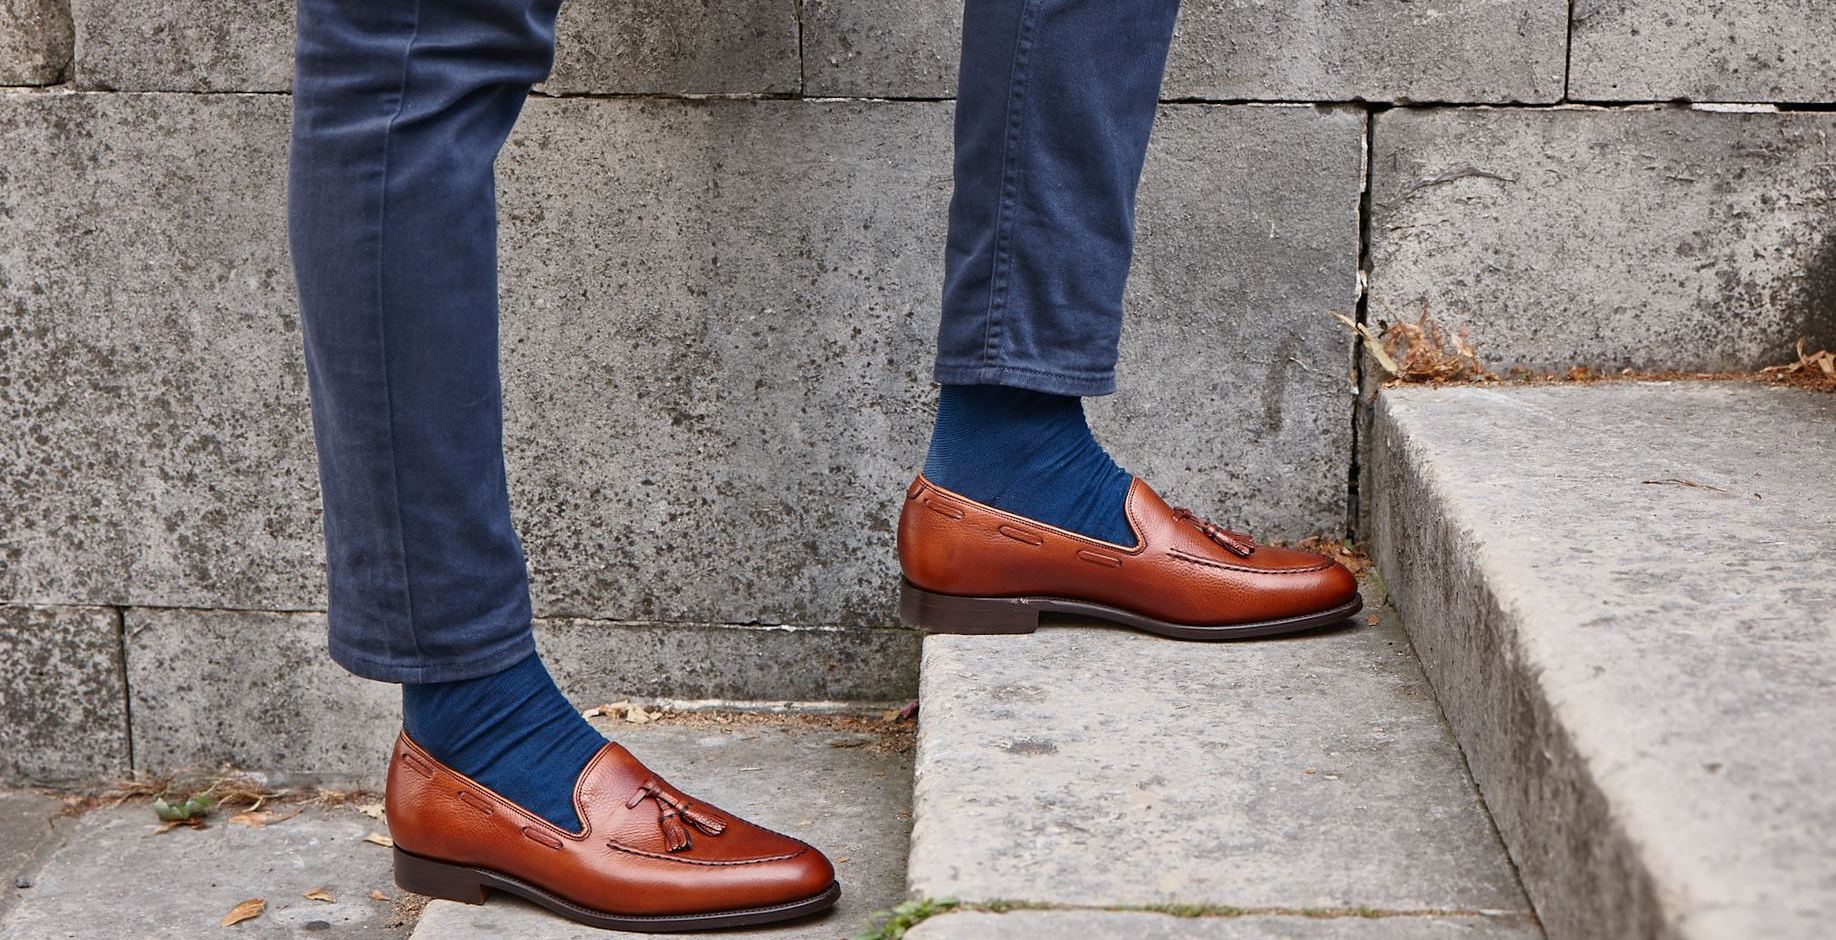 Newborough- Men's tassel loafer shoes by Barker